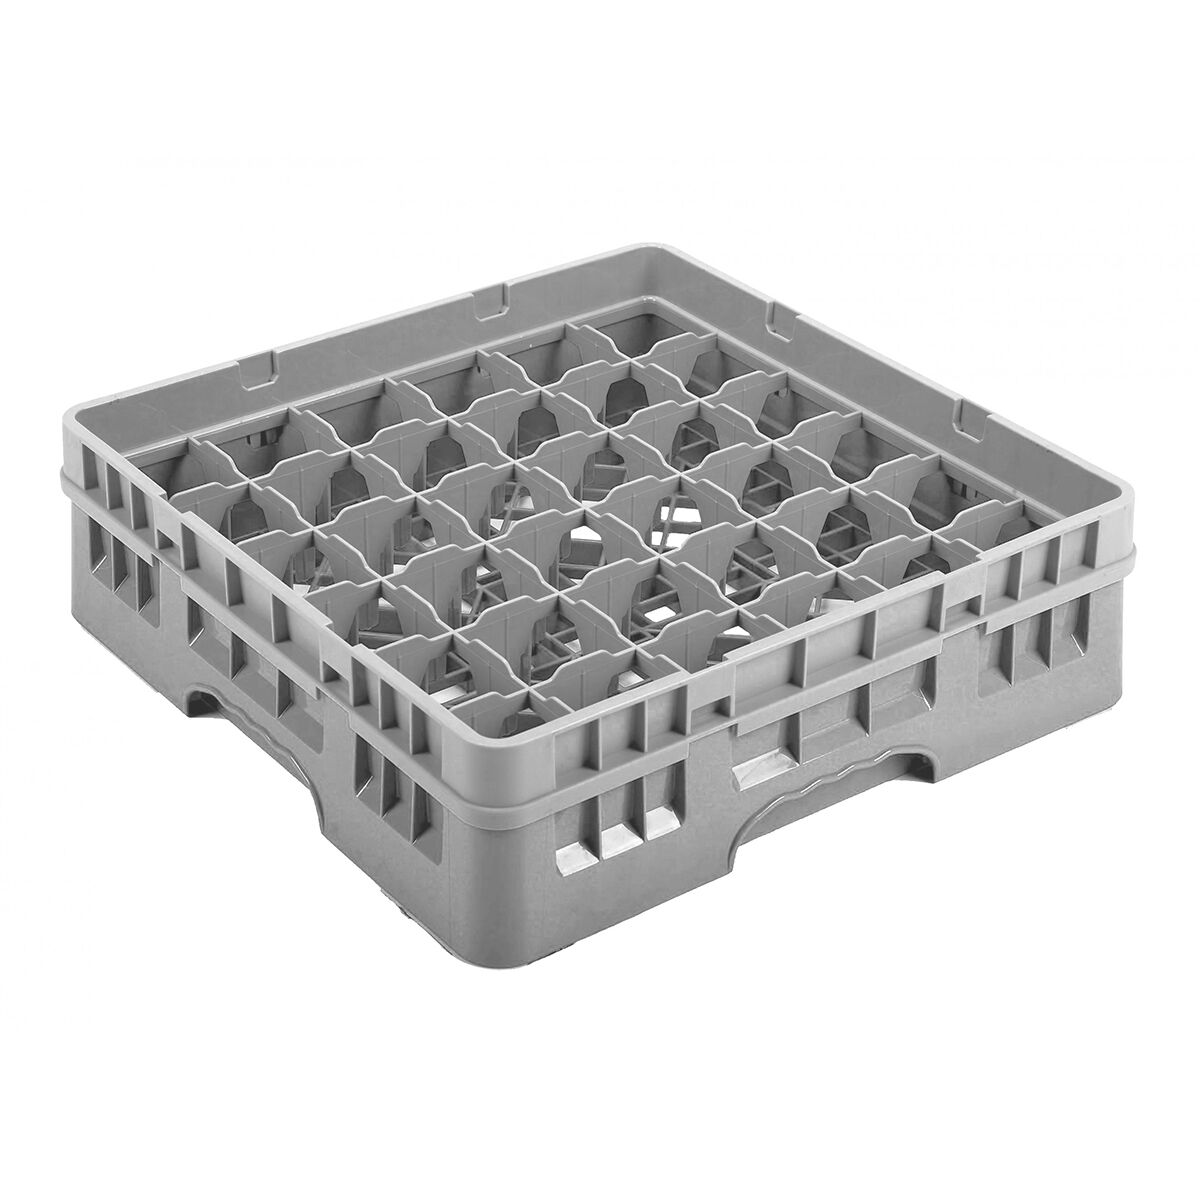 Кассета для мойки посуды - 36 ячеек (размер ячейки 75х75х80 мм), P.L. Proff Cuisine